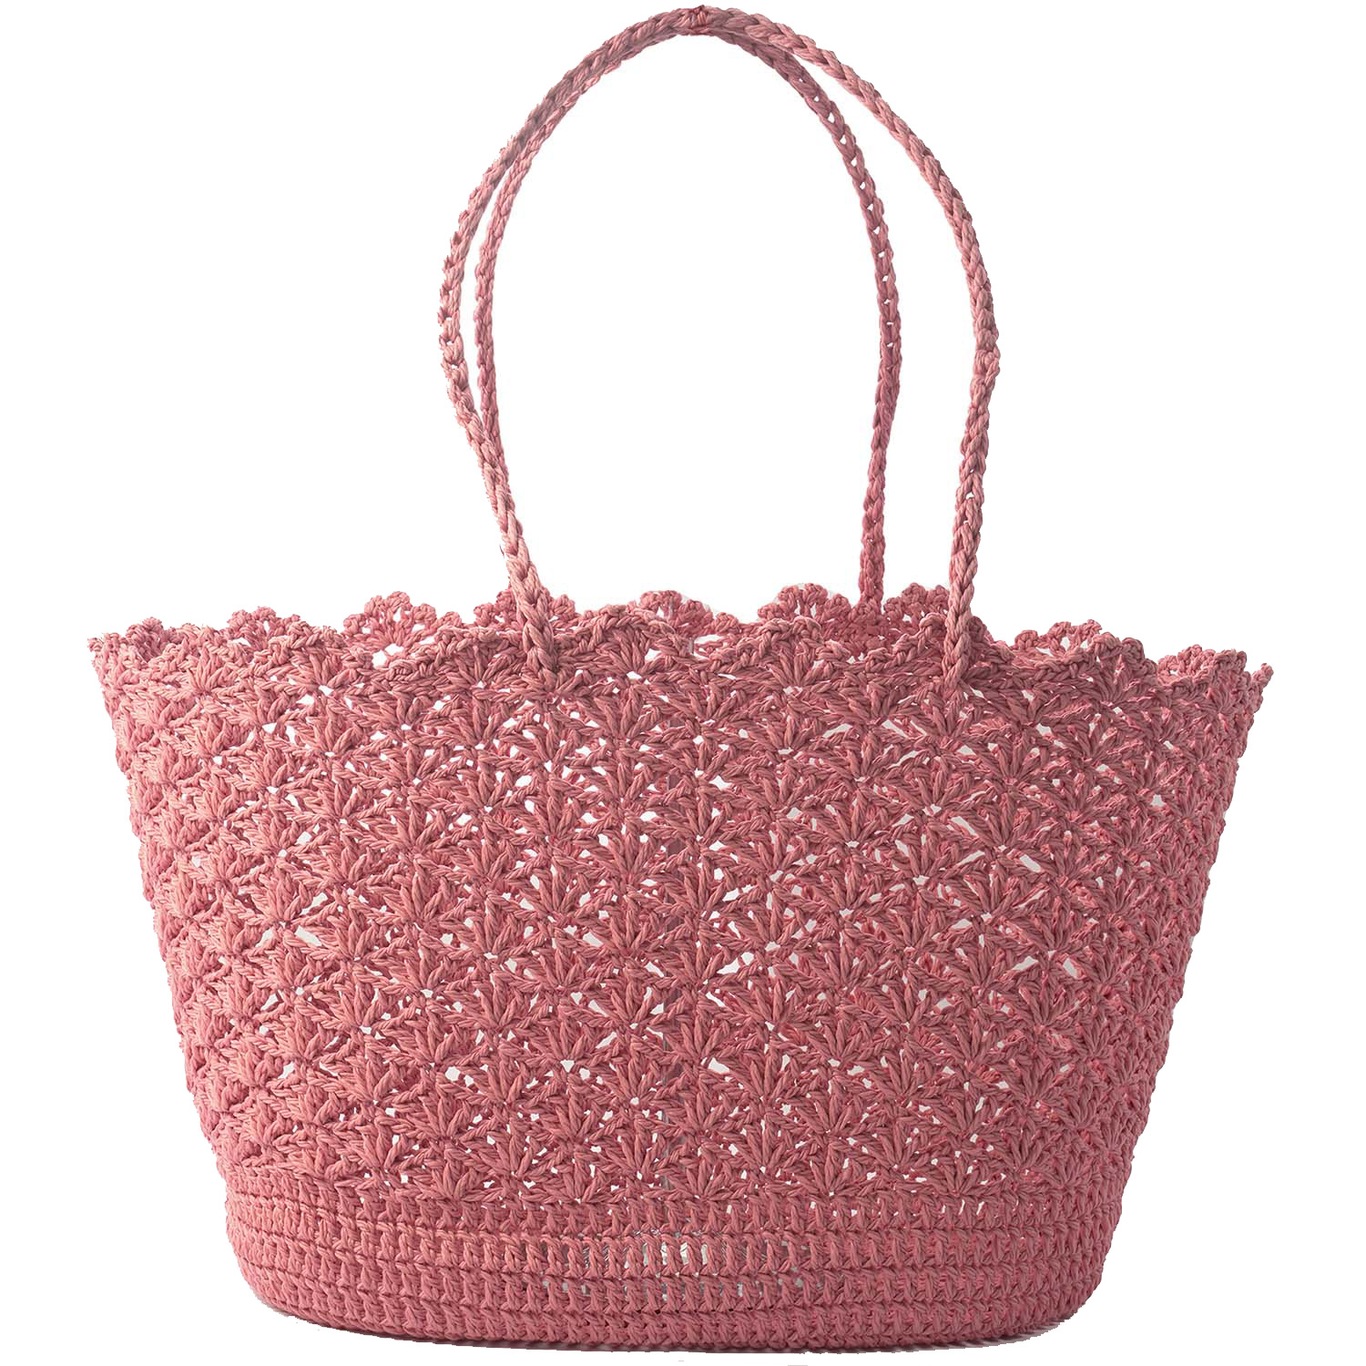 Picnic Crocheted Bag, Pink